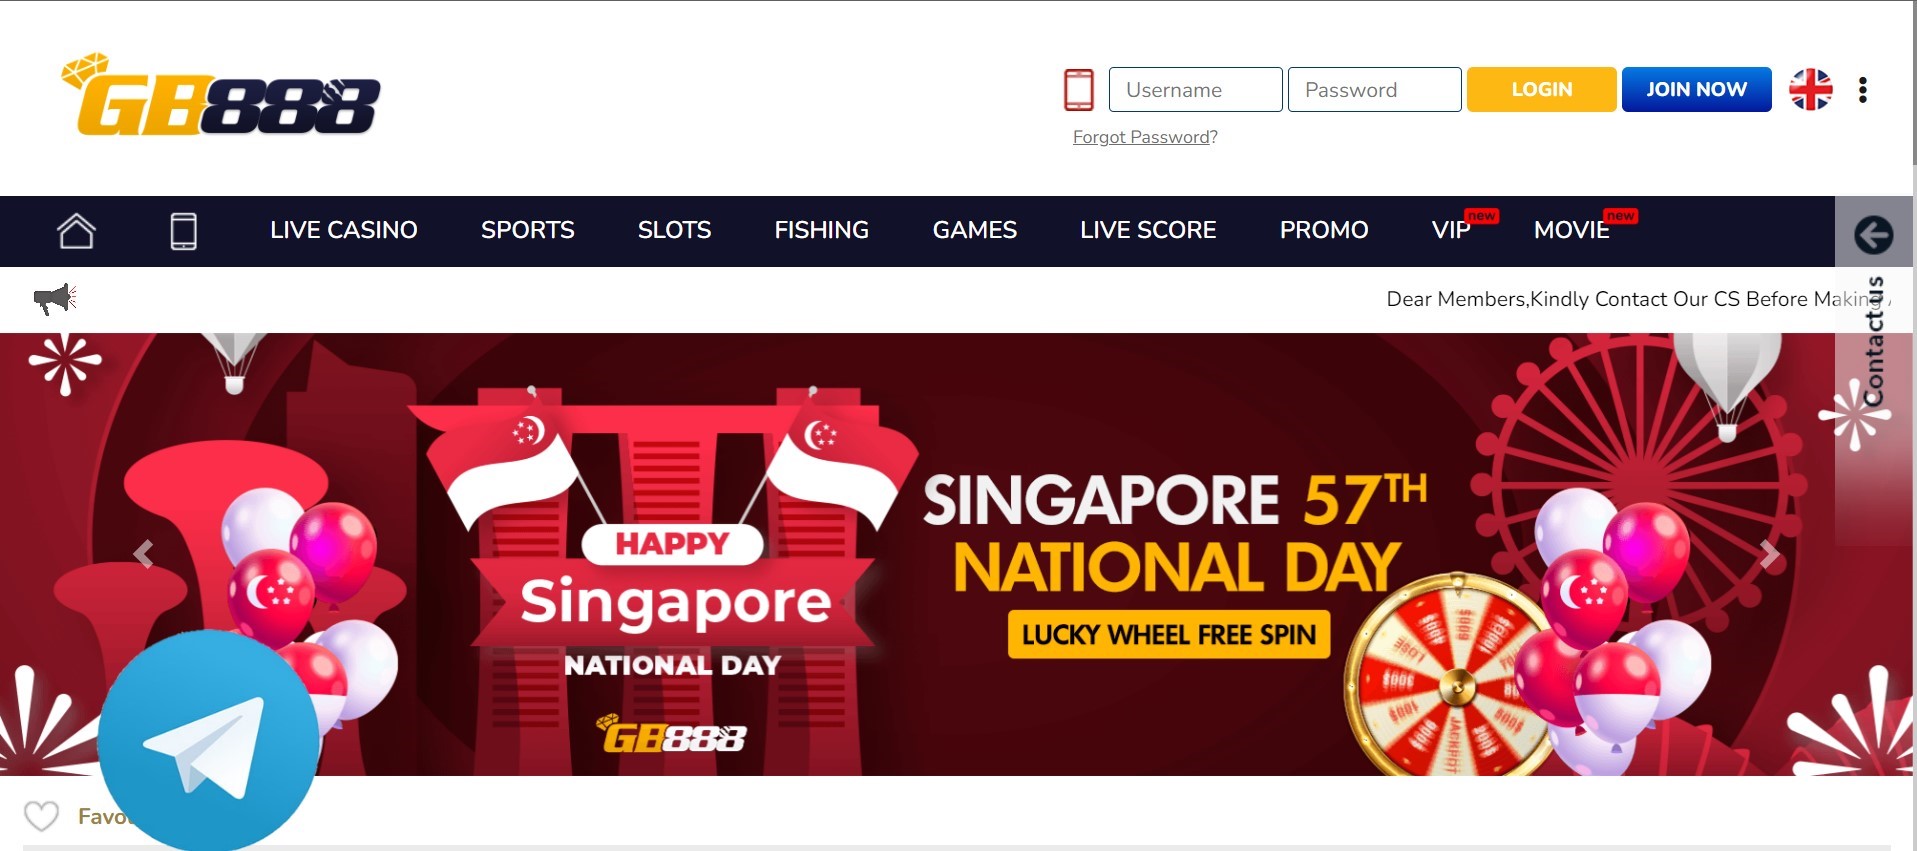 Goldbet888 Online Casino Singapore Homepage